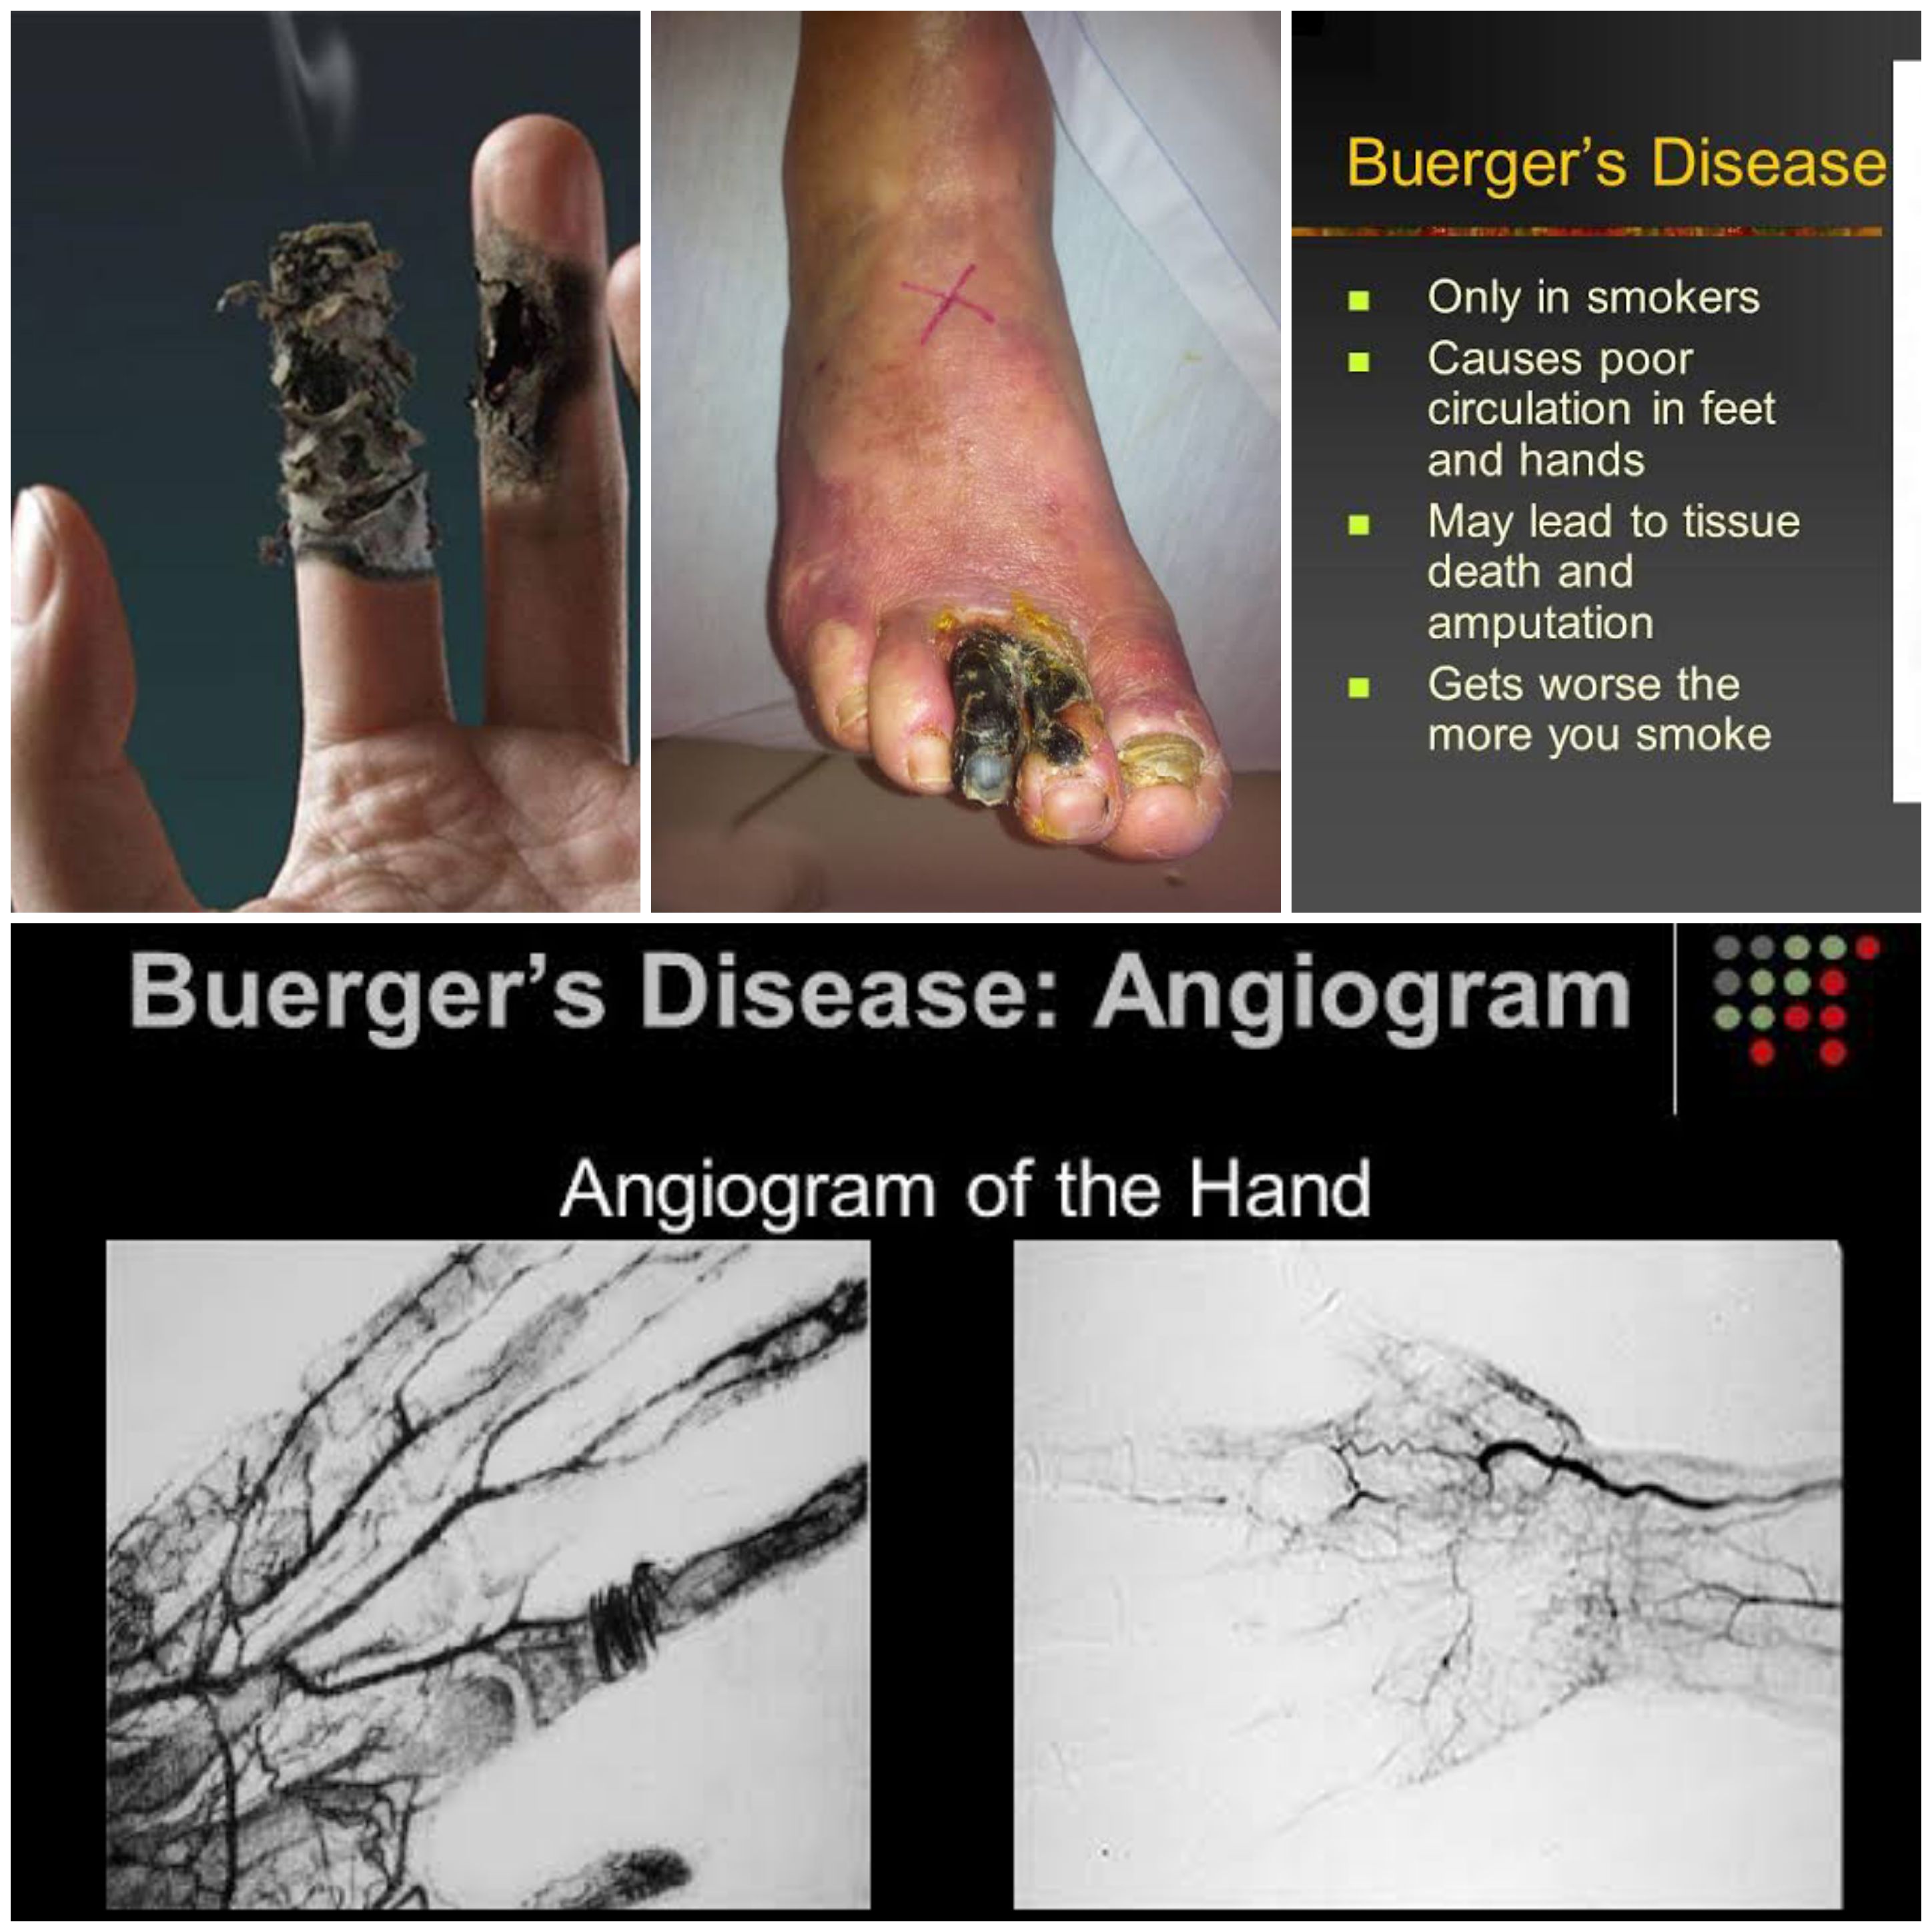 Buergers disease treatment.jpg